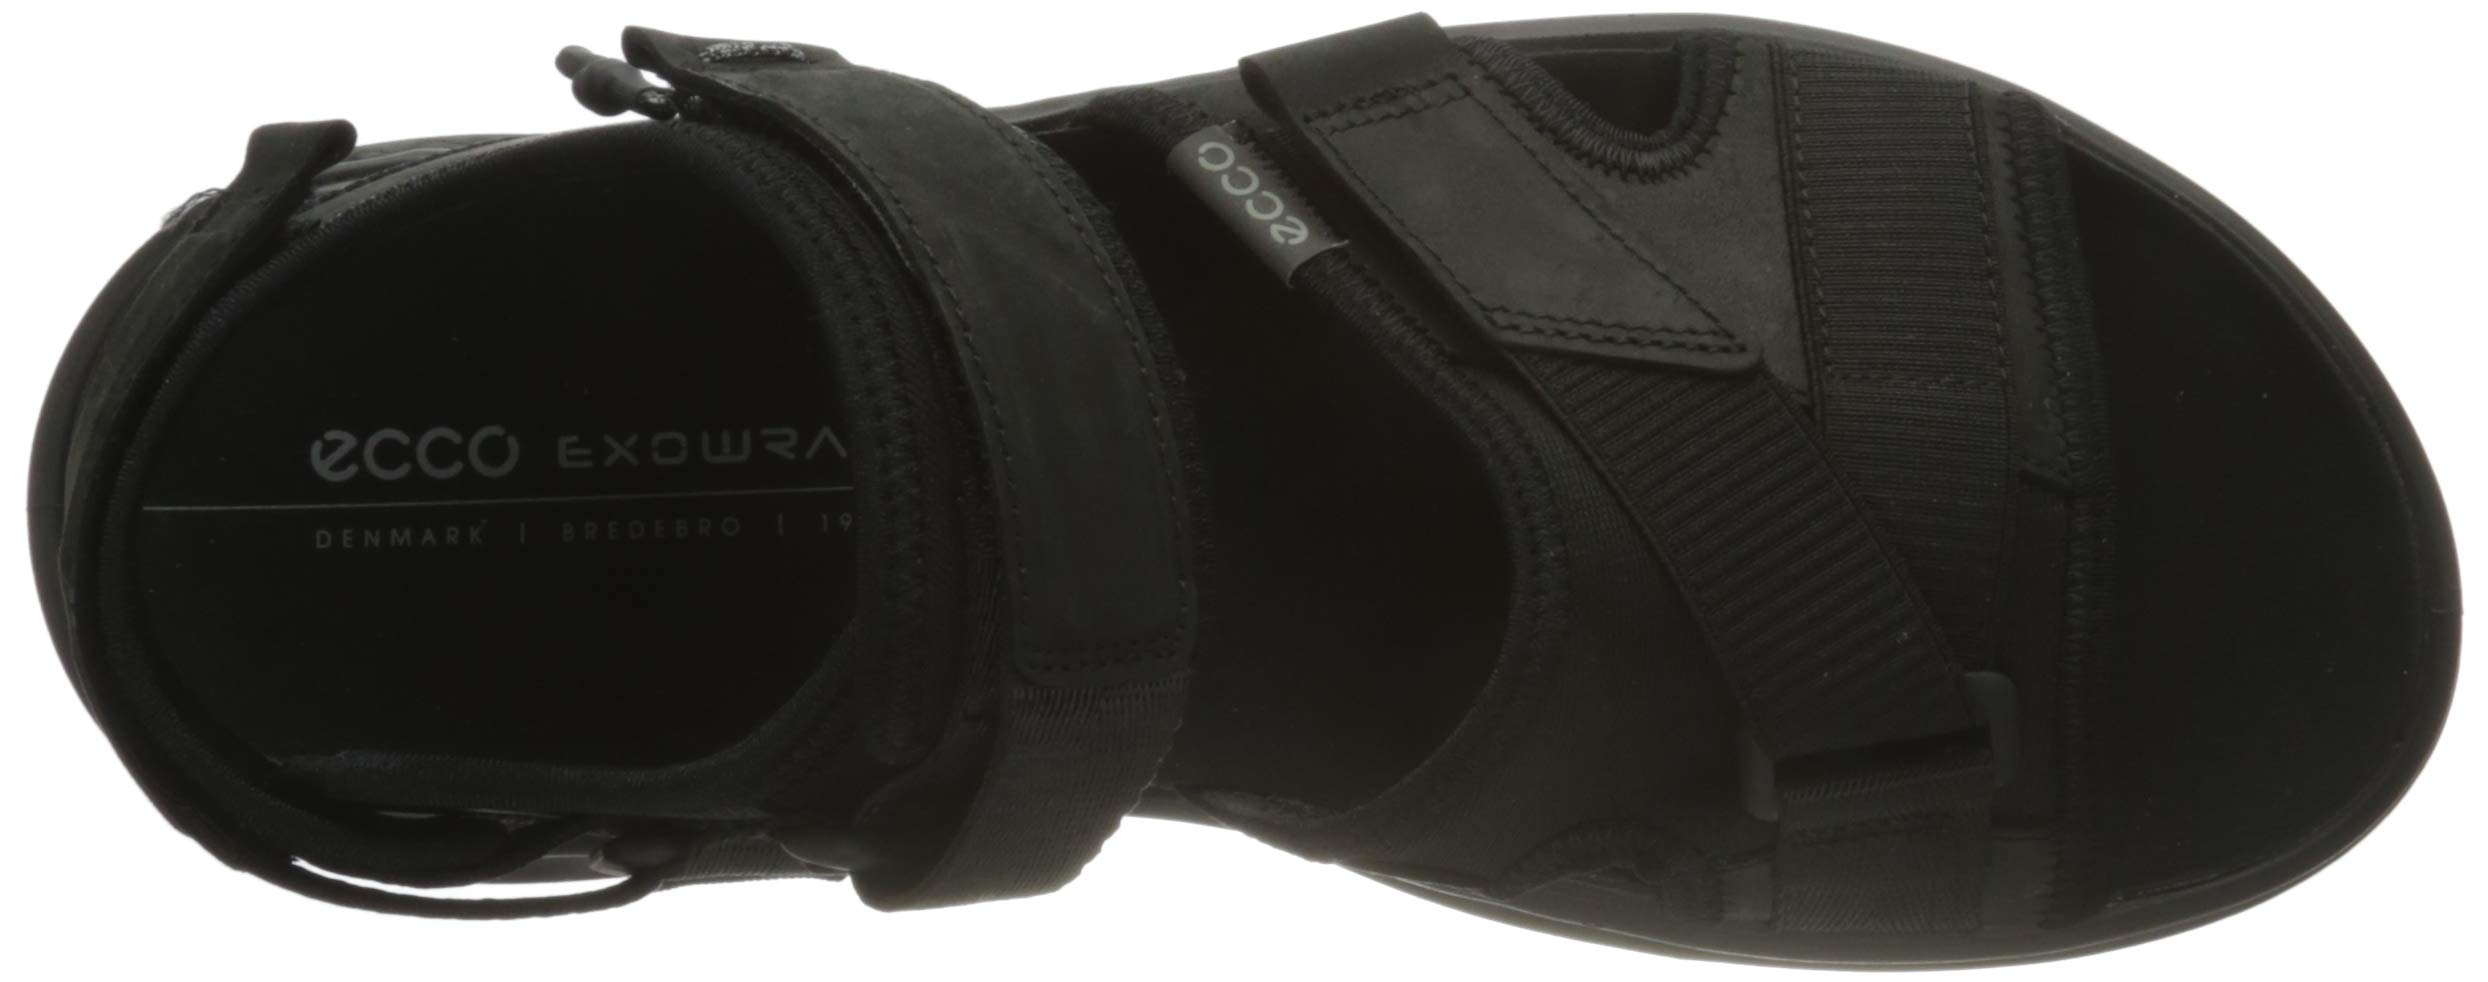 ECCO Men's Exowrap 3-Strap Sport Sandal